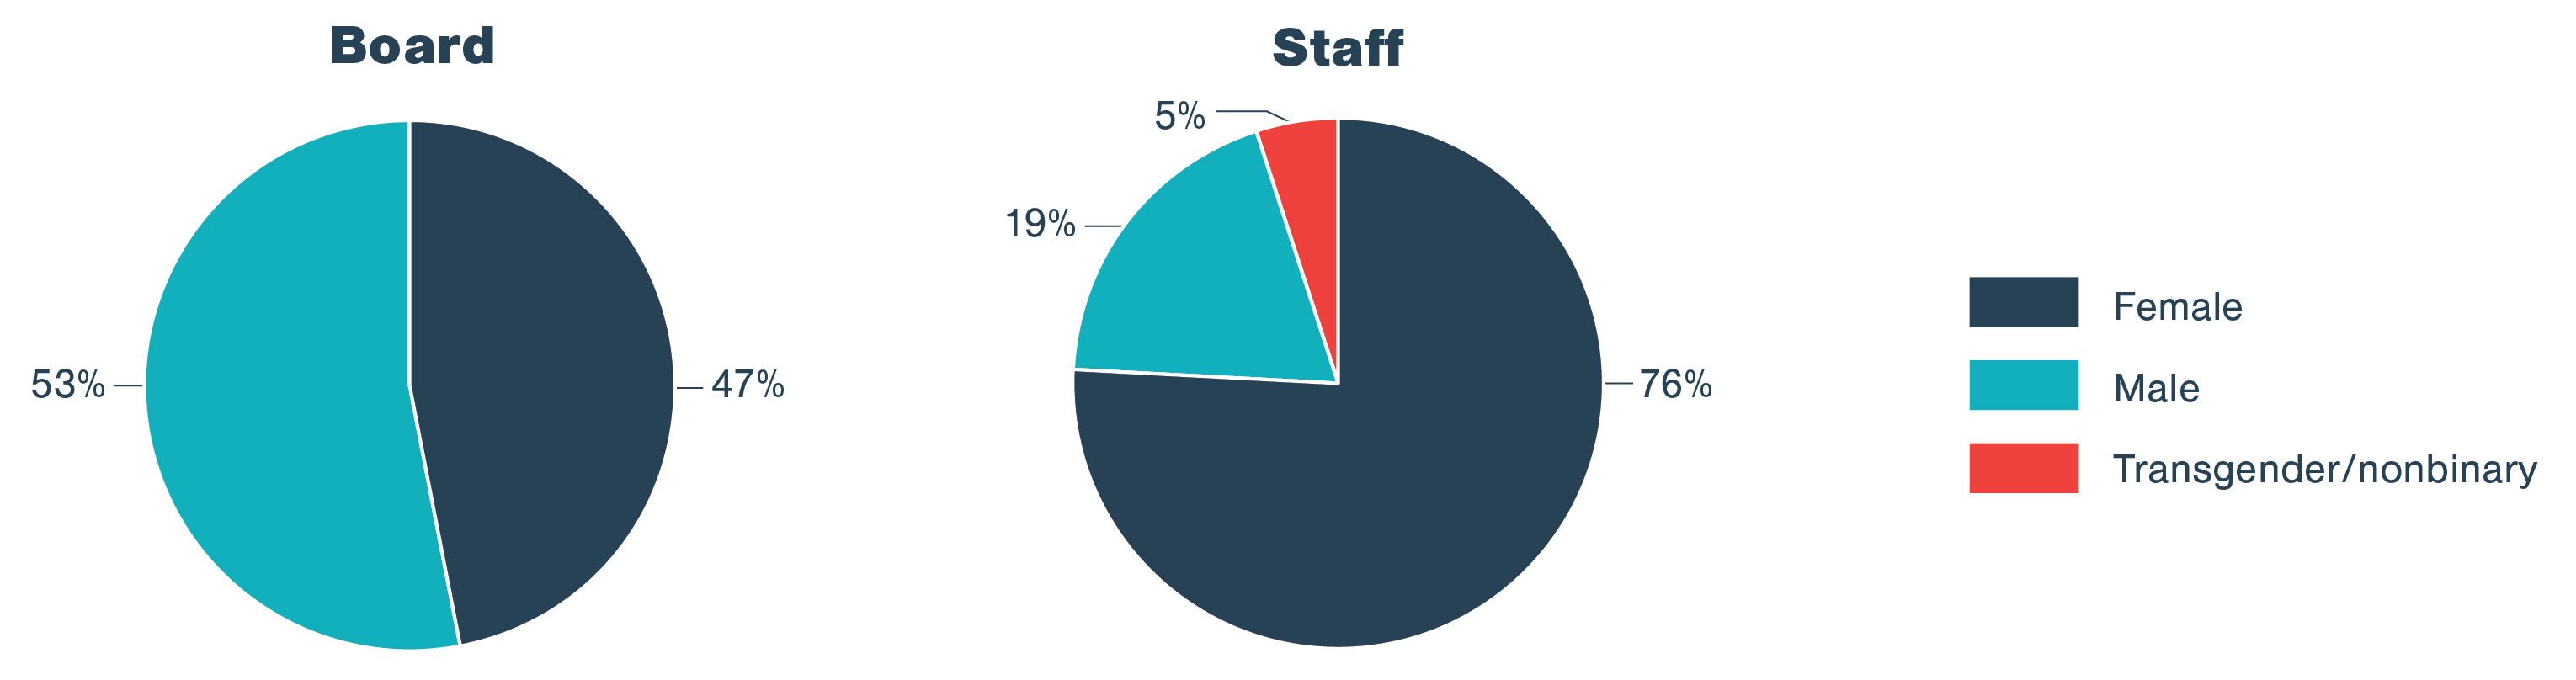 Board: 47% Female, 53% Male. Staff: 76% Female, 19% Male, 5% Transgender/nonbinary.